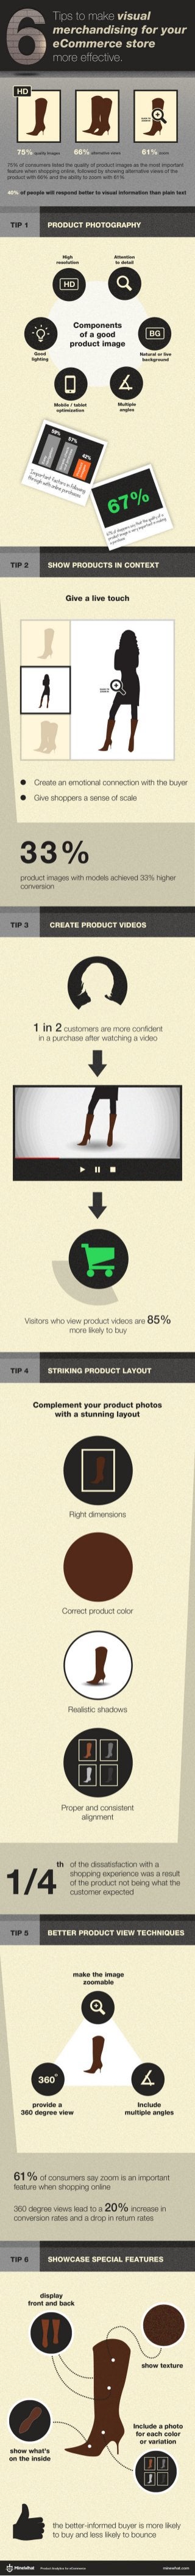 eCommerce: Visual Merchandising Tips